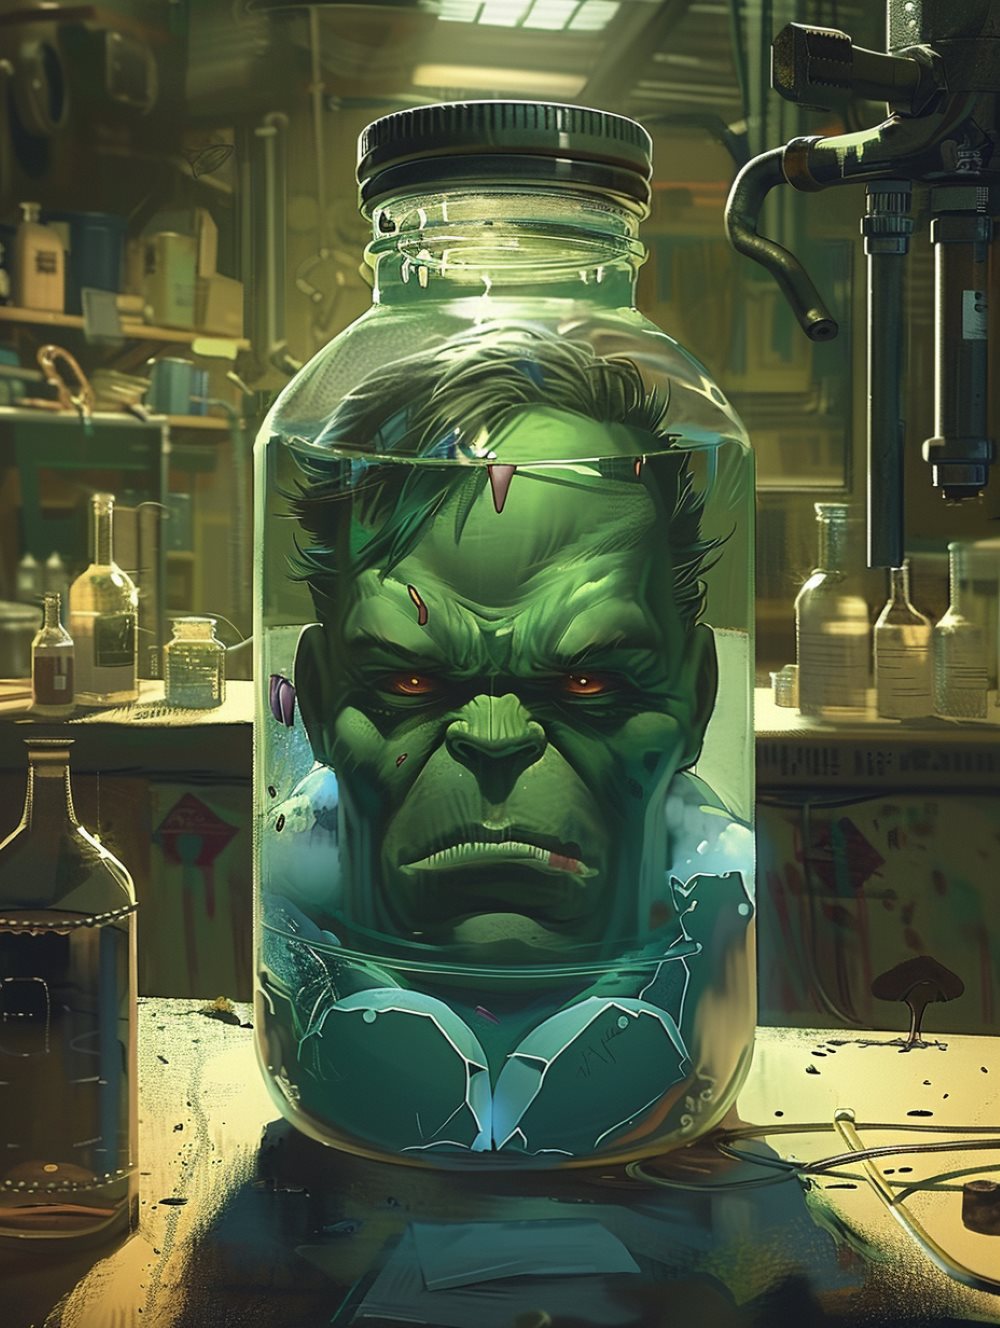 Hulk's head is stored in a jar